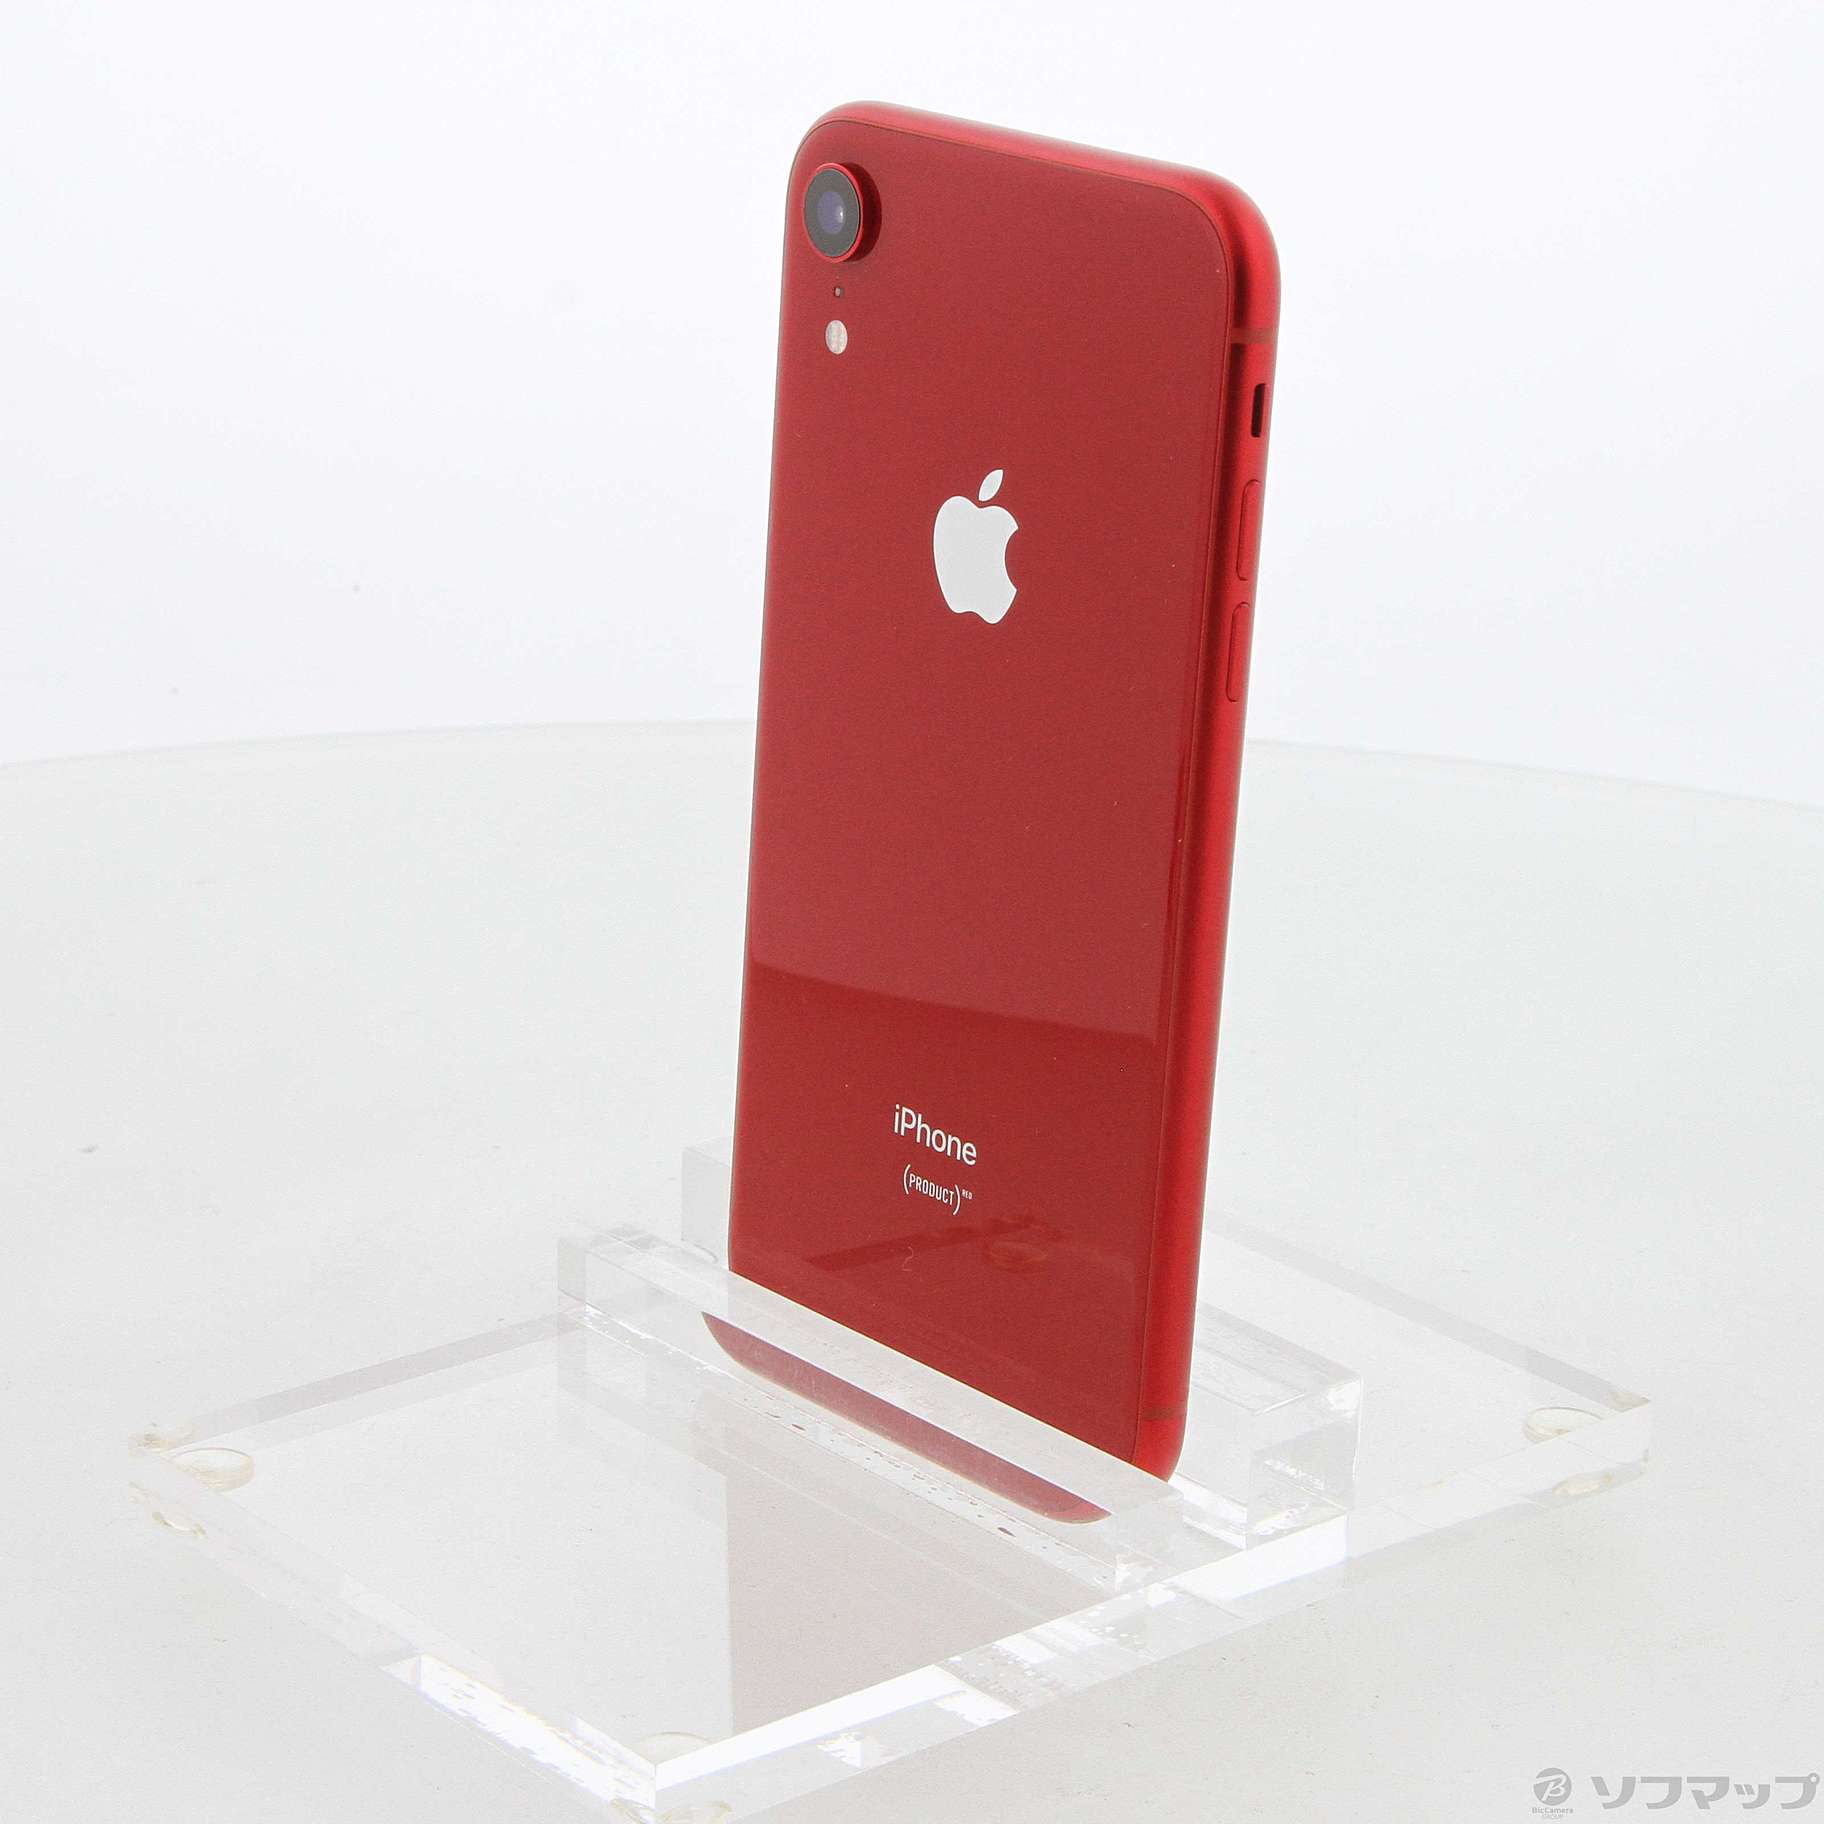 iPhoneXR 128GB Red プロダクトレッド 赤 - スマートフォン本体